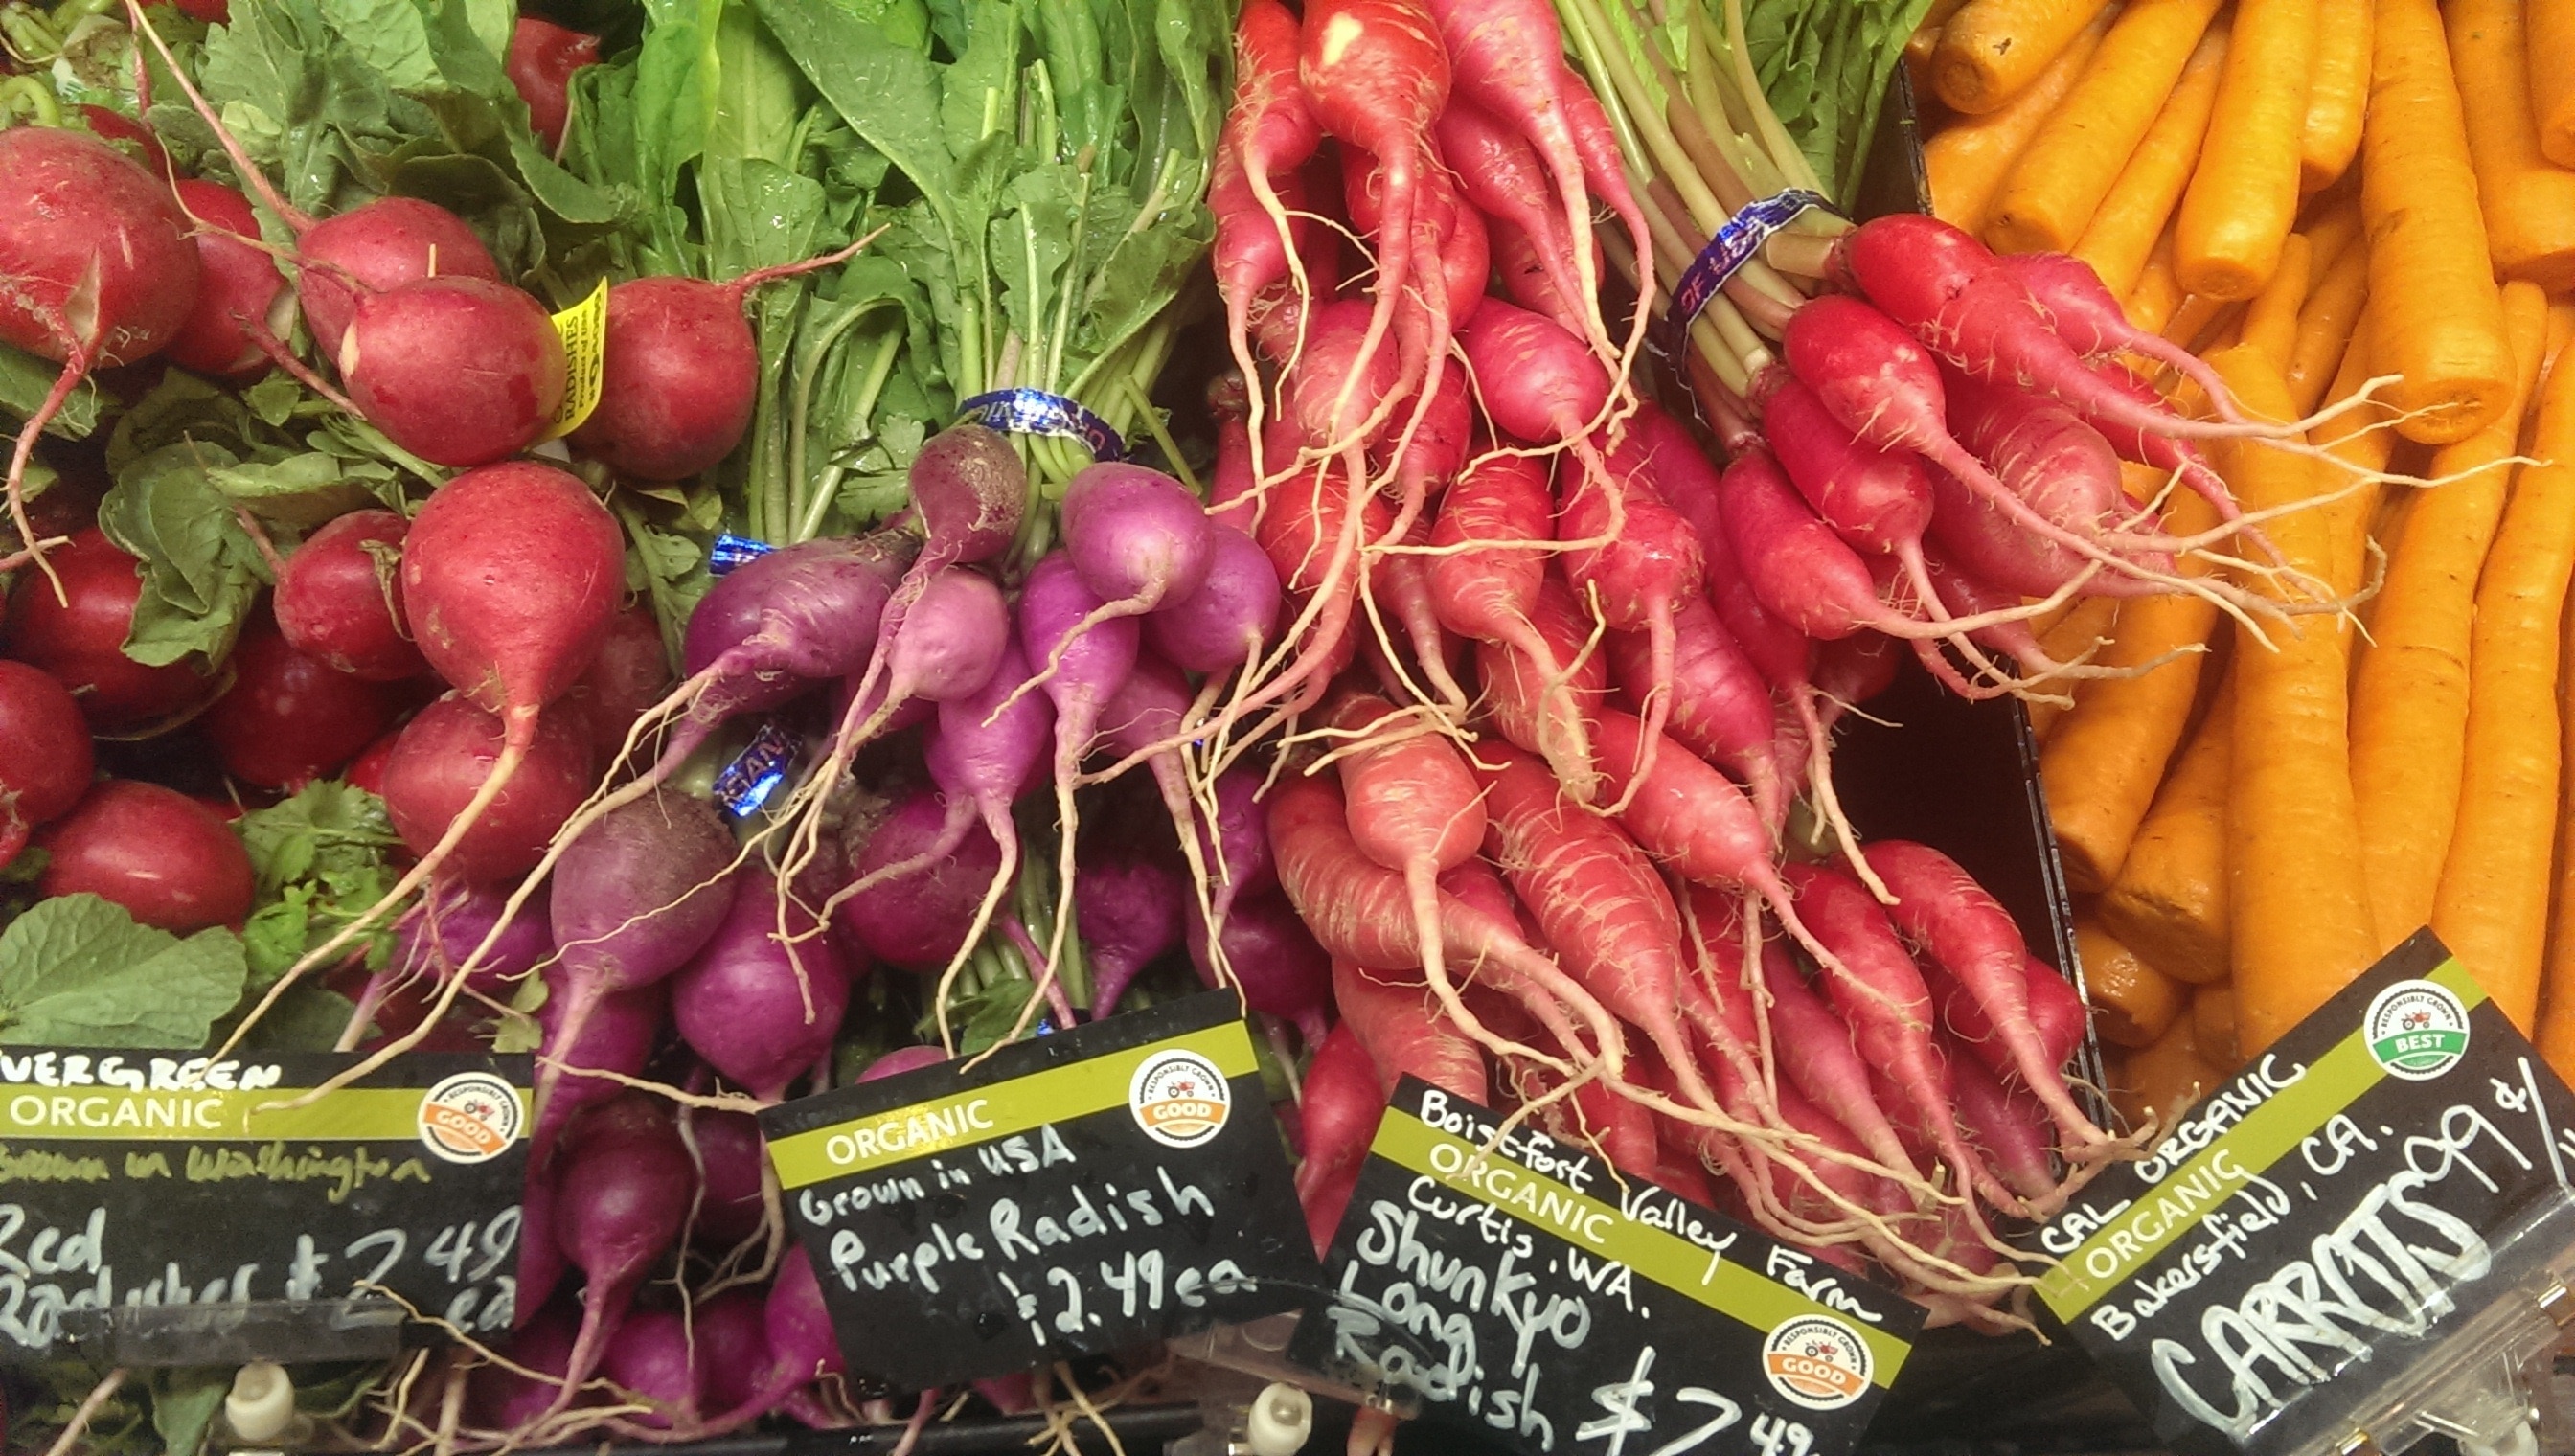 purple radish, shunkyo long radish and carrots display